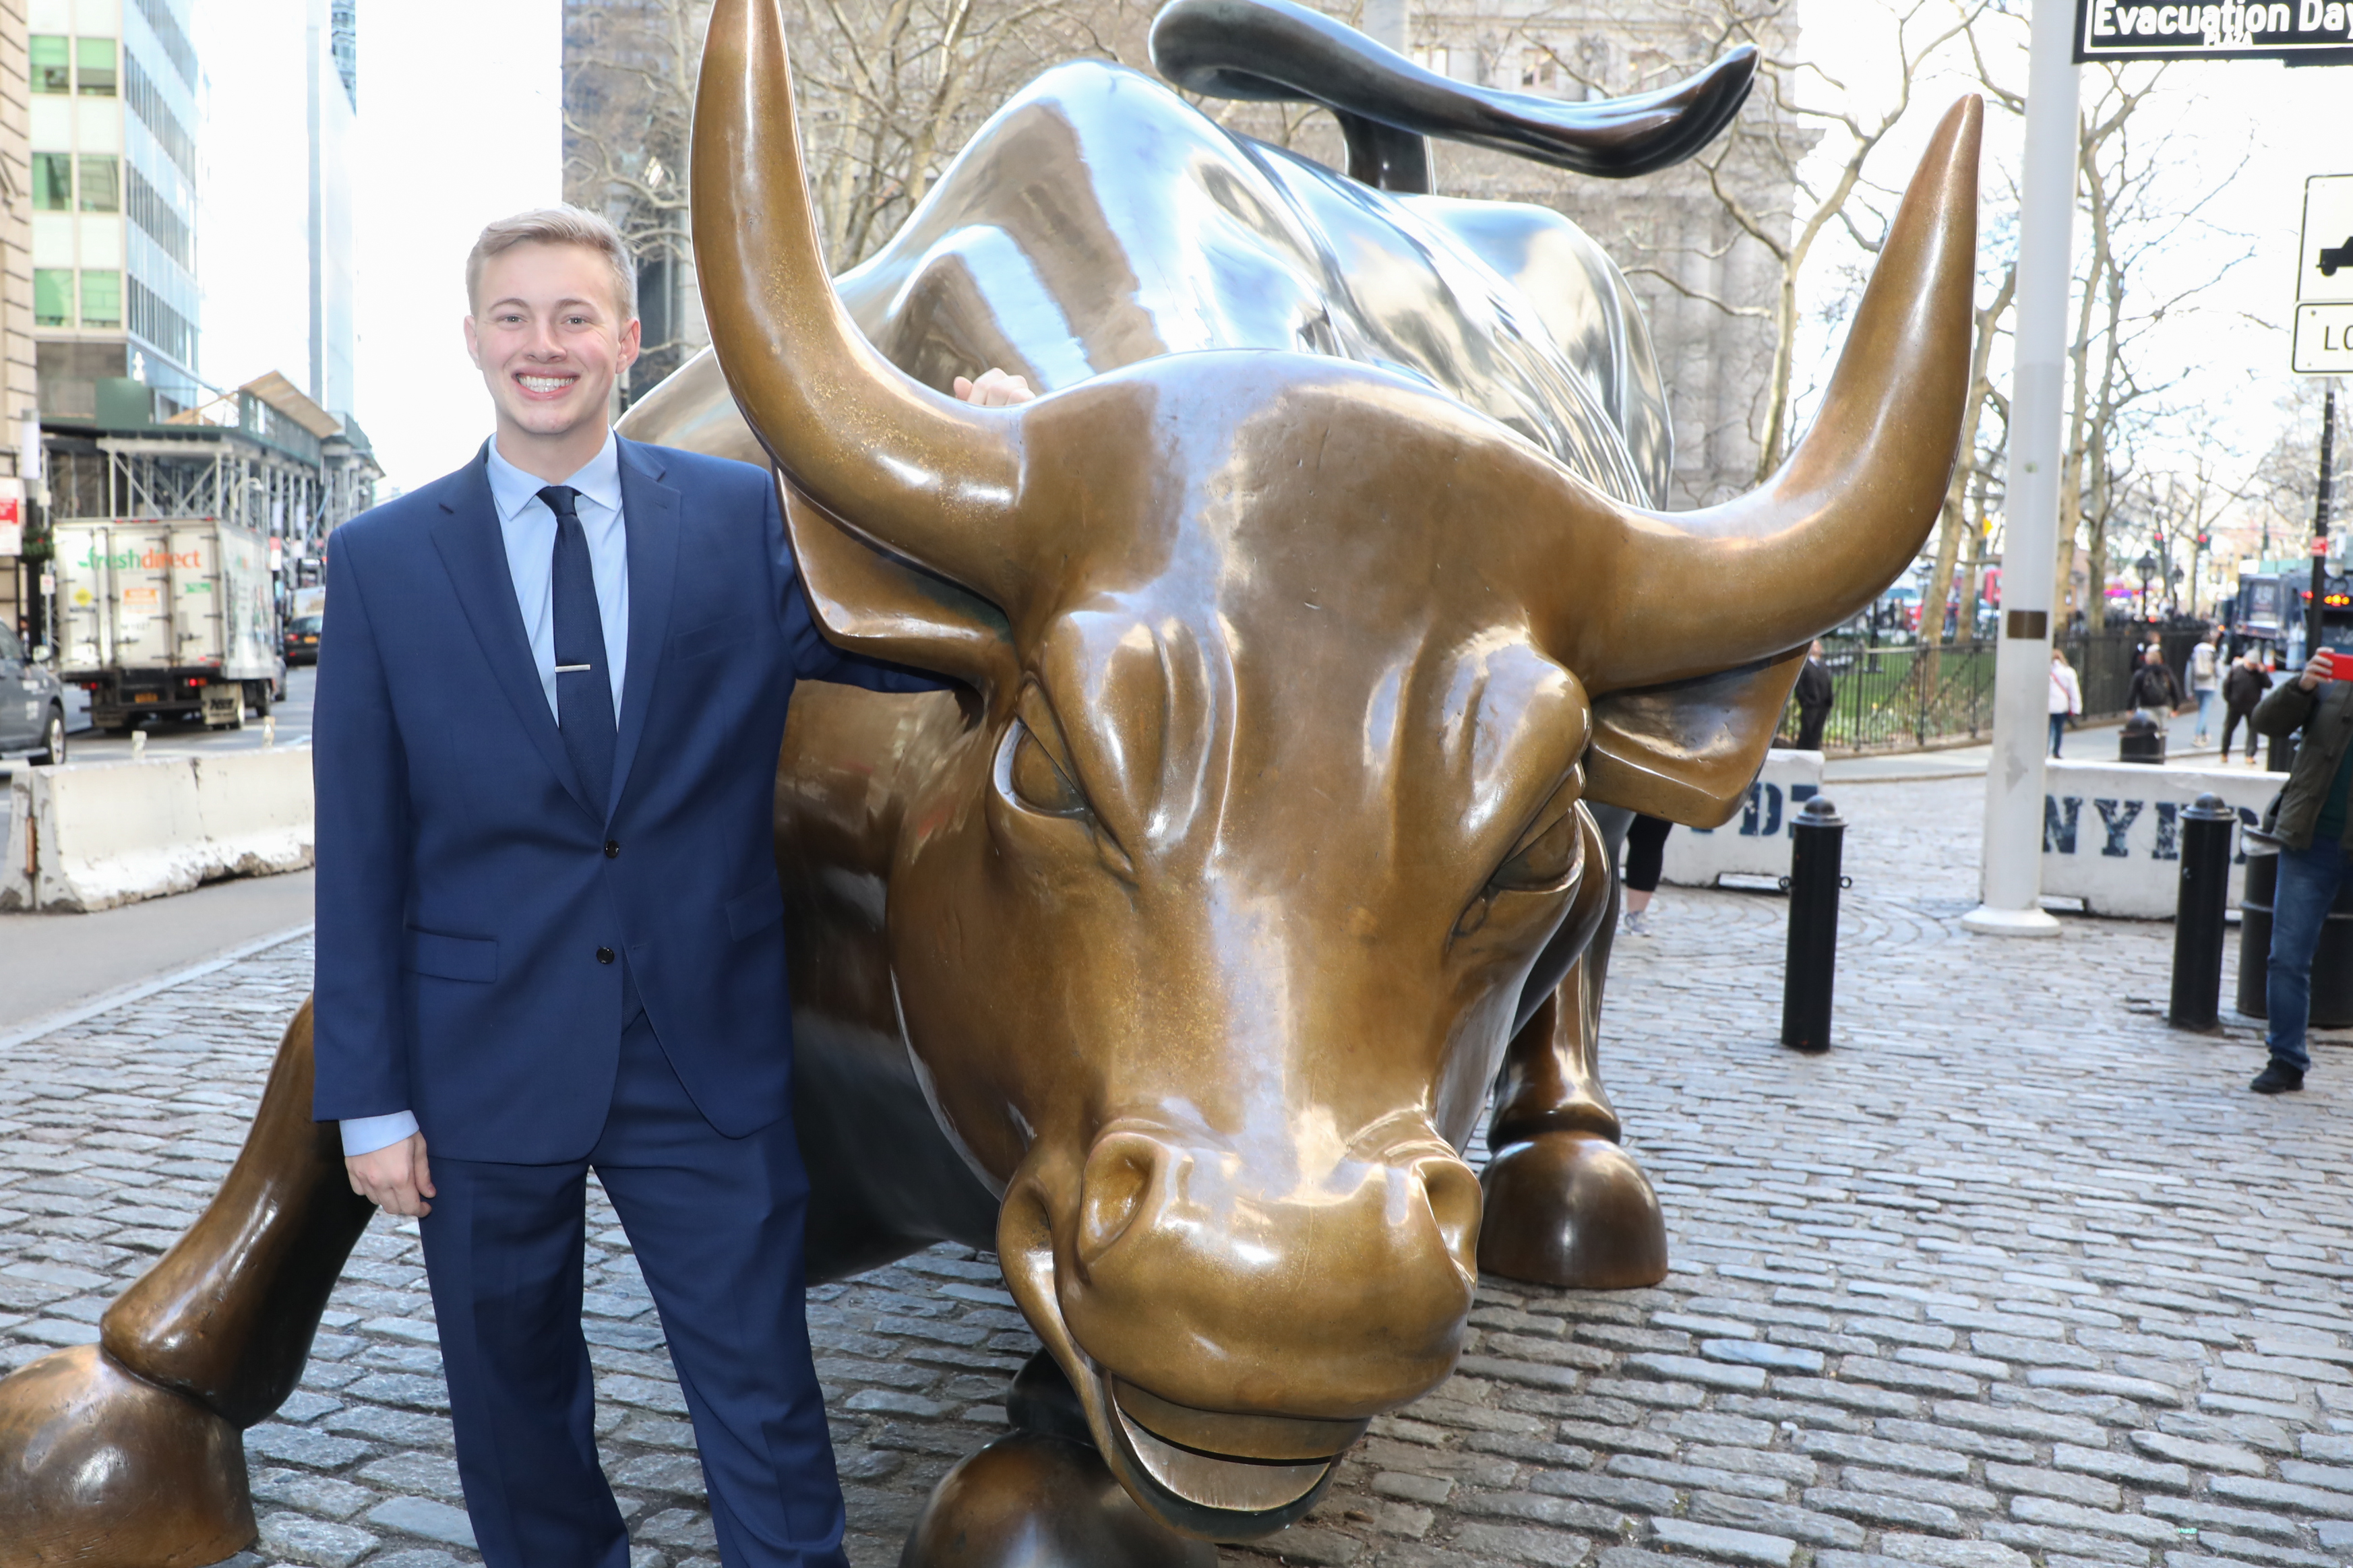 Wall Street Scholars next to the Wall Street Bull